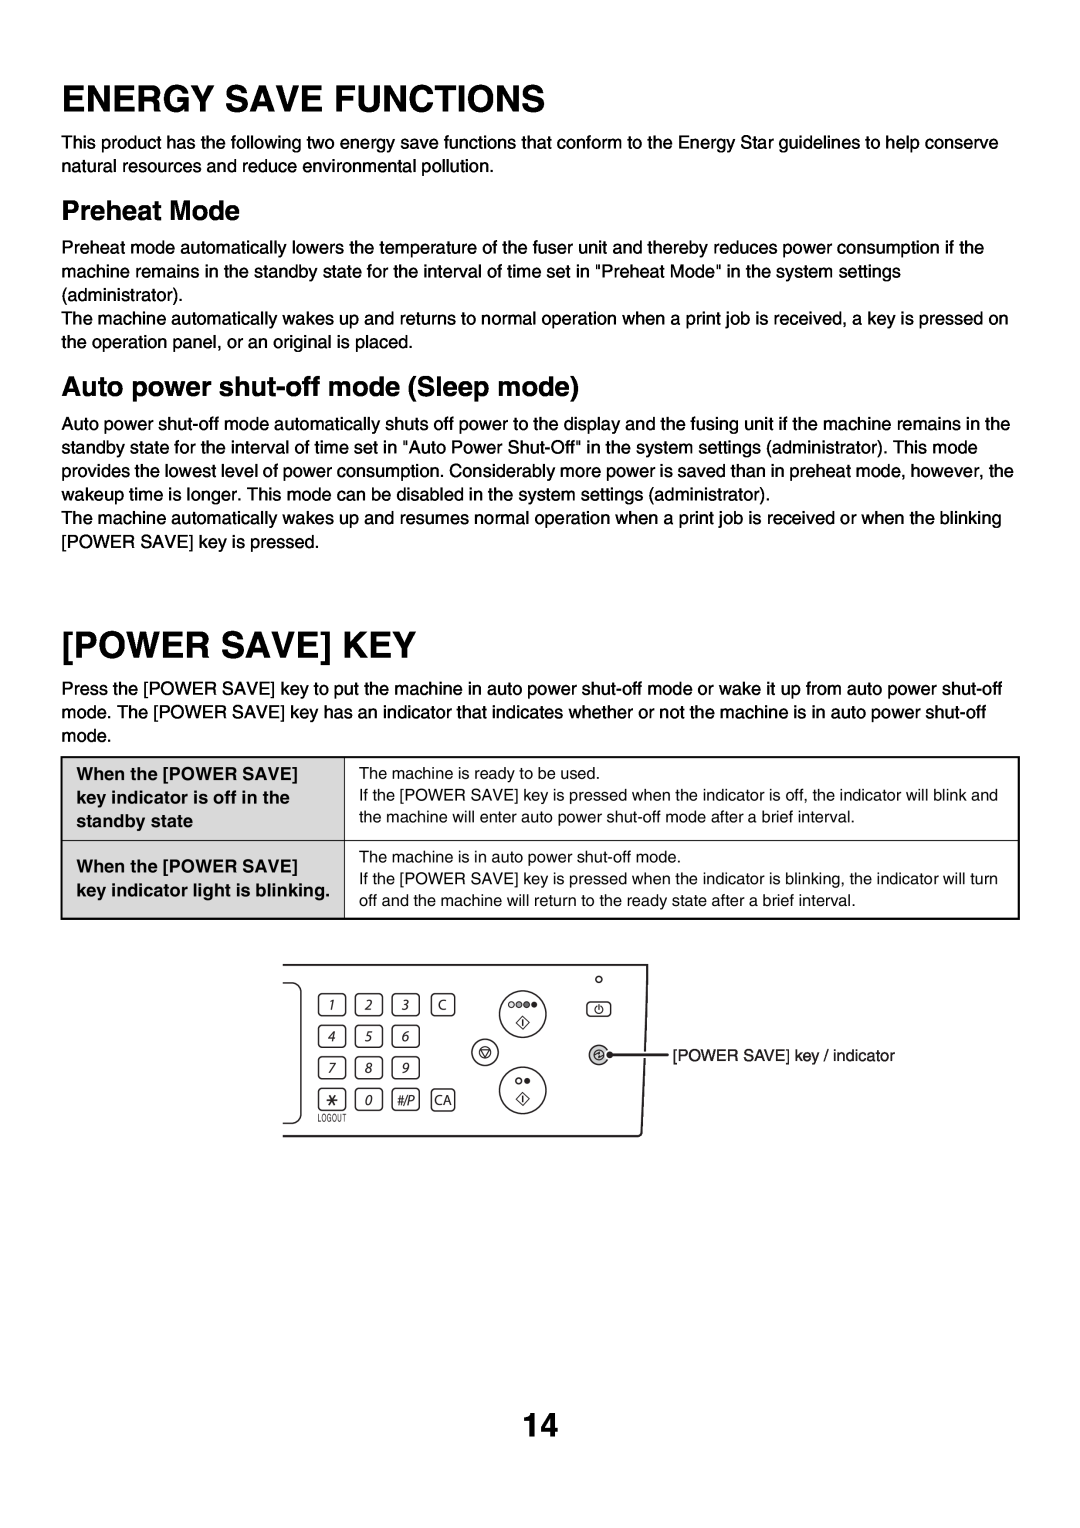 Sharp MX-3500N Energy Save Functions, Power Save Key, Preheat Mode, Auto power shut-off mode Sleep mode, standby state 